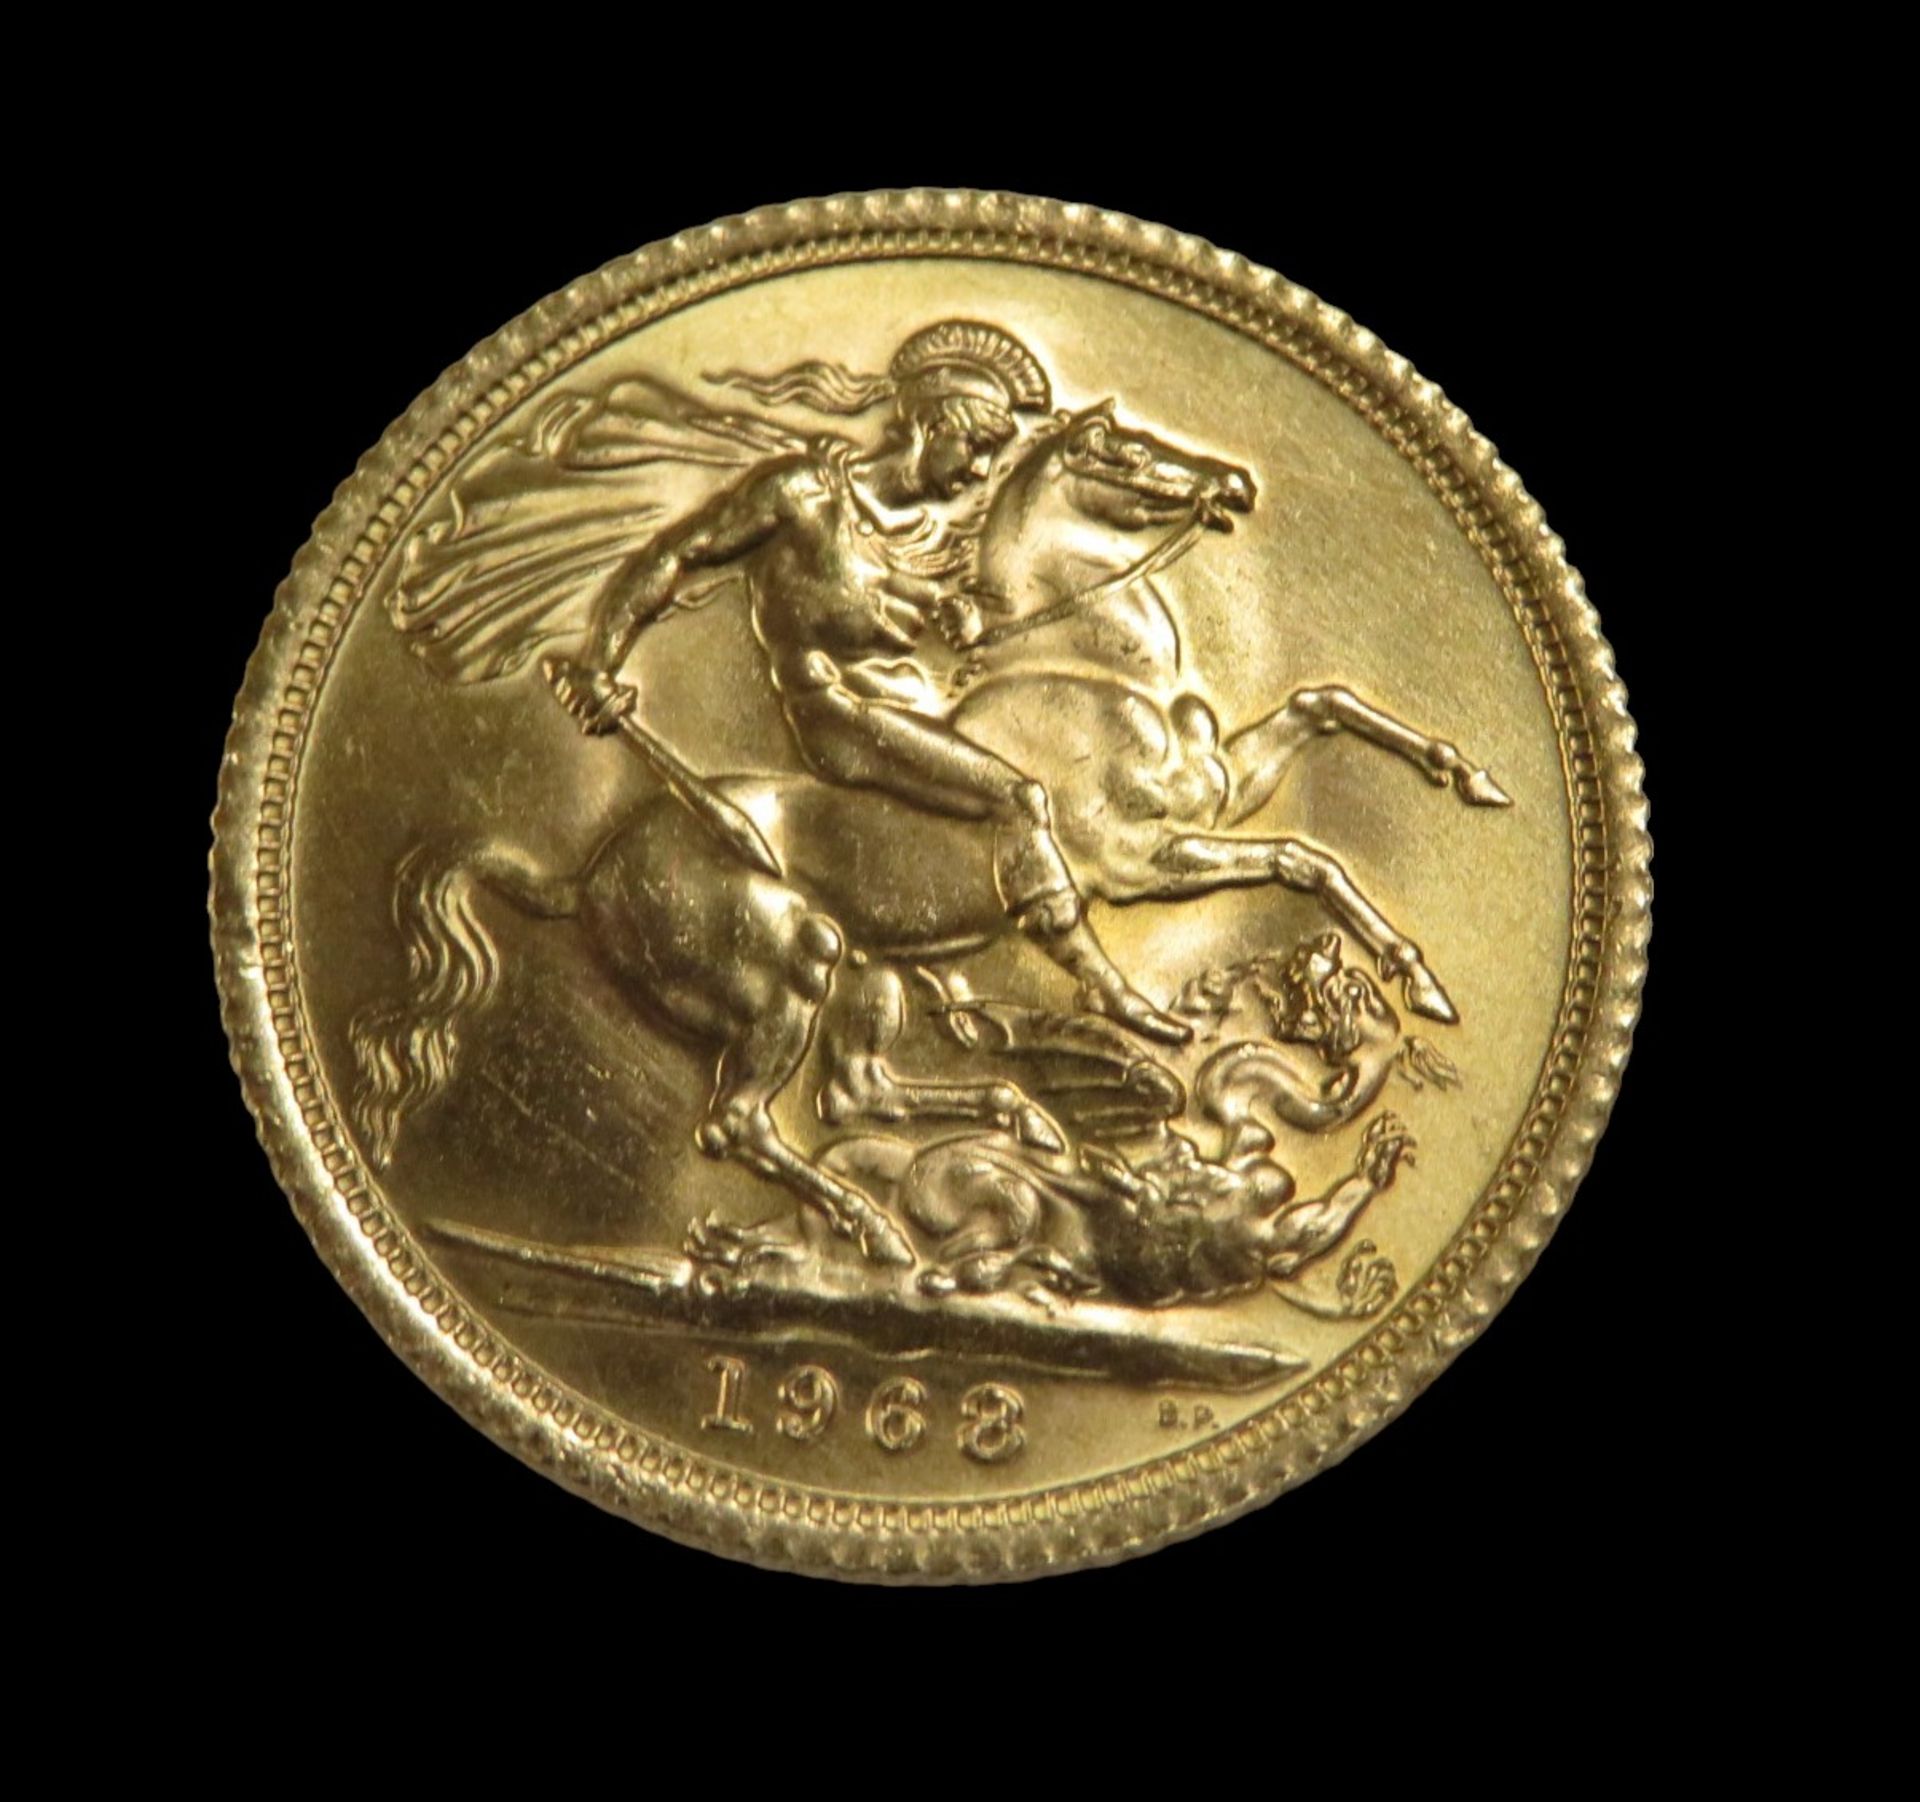 Goldmünze, 1 Pfund, Sovereign, Elizabeth II, 1968, Gold 916/000, 7,99 g, d 2,2 cm. - Image 2 of 2